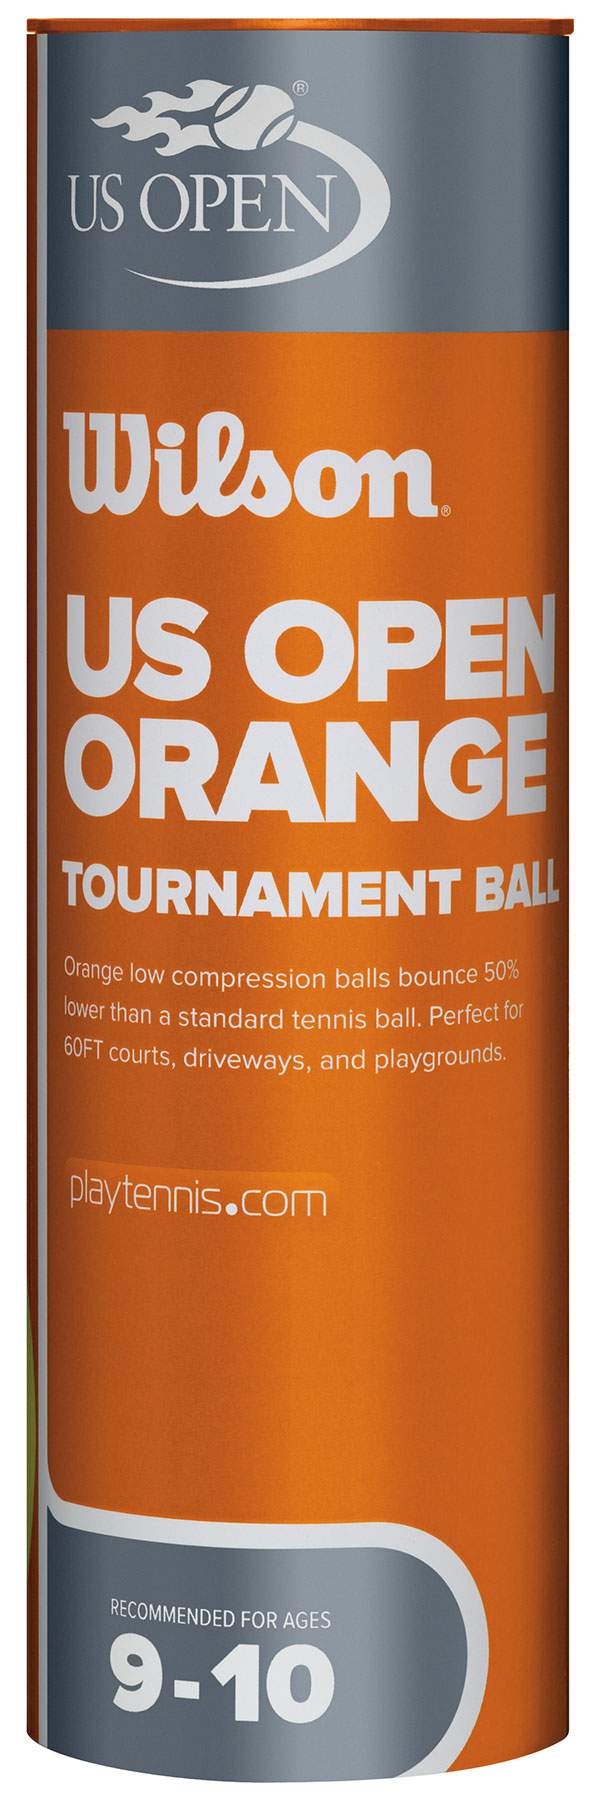 Wilson US Open Tournament Orange Ball (1x) vid-40152650973271